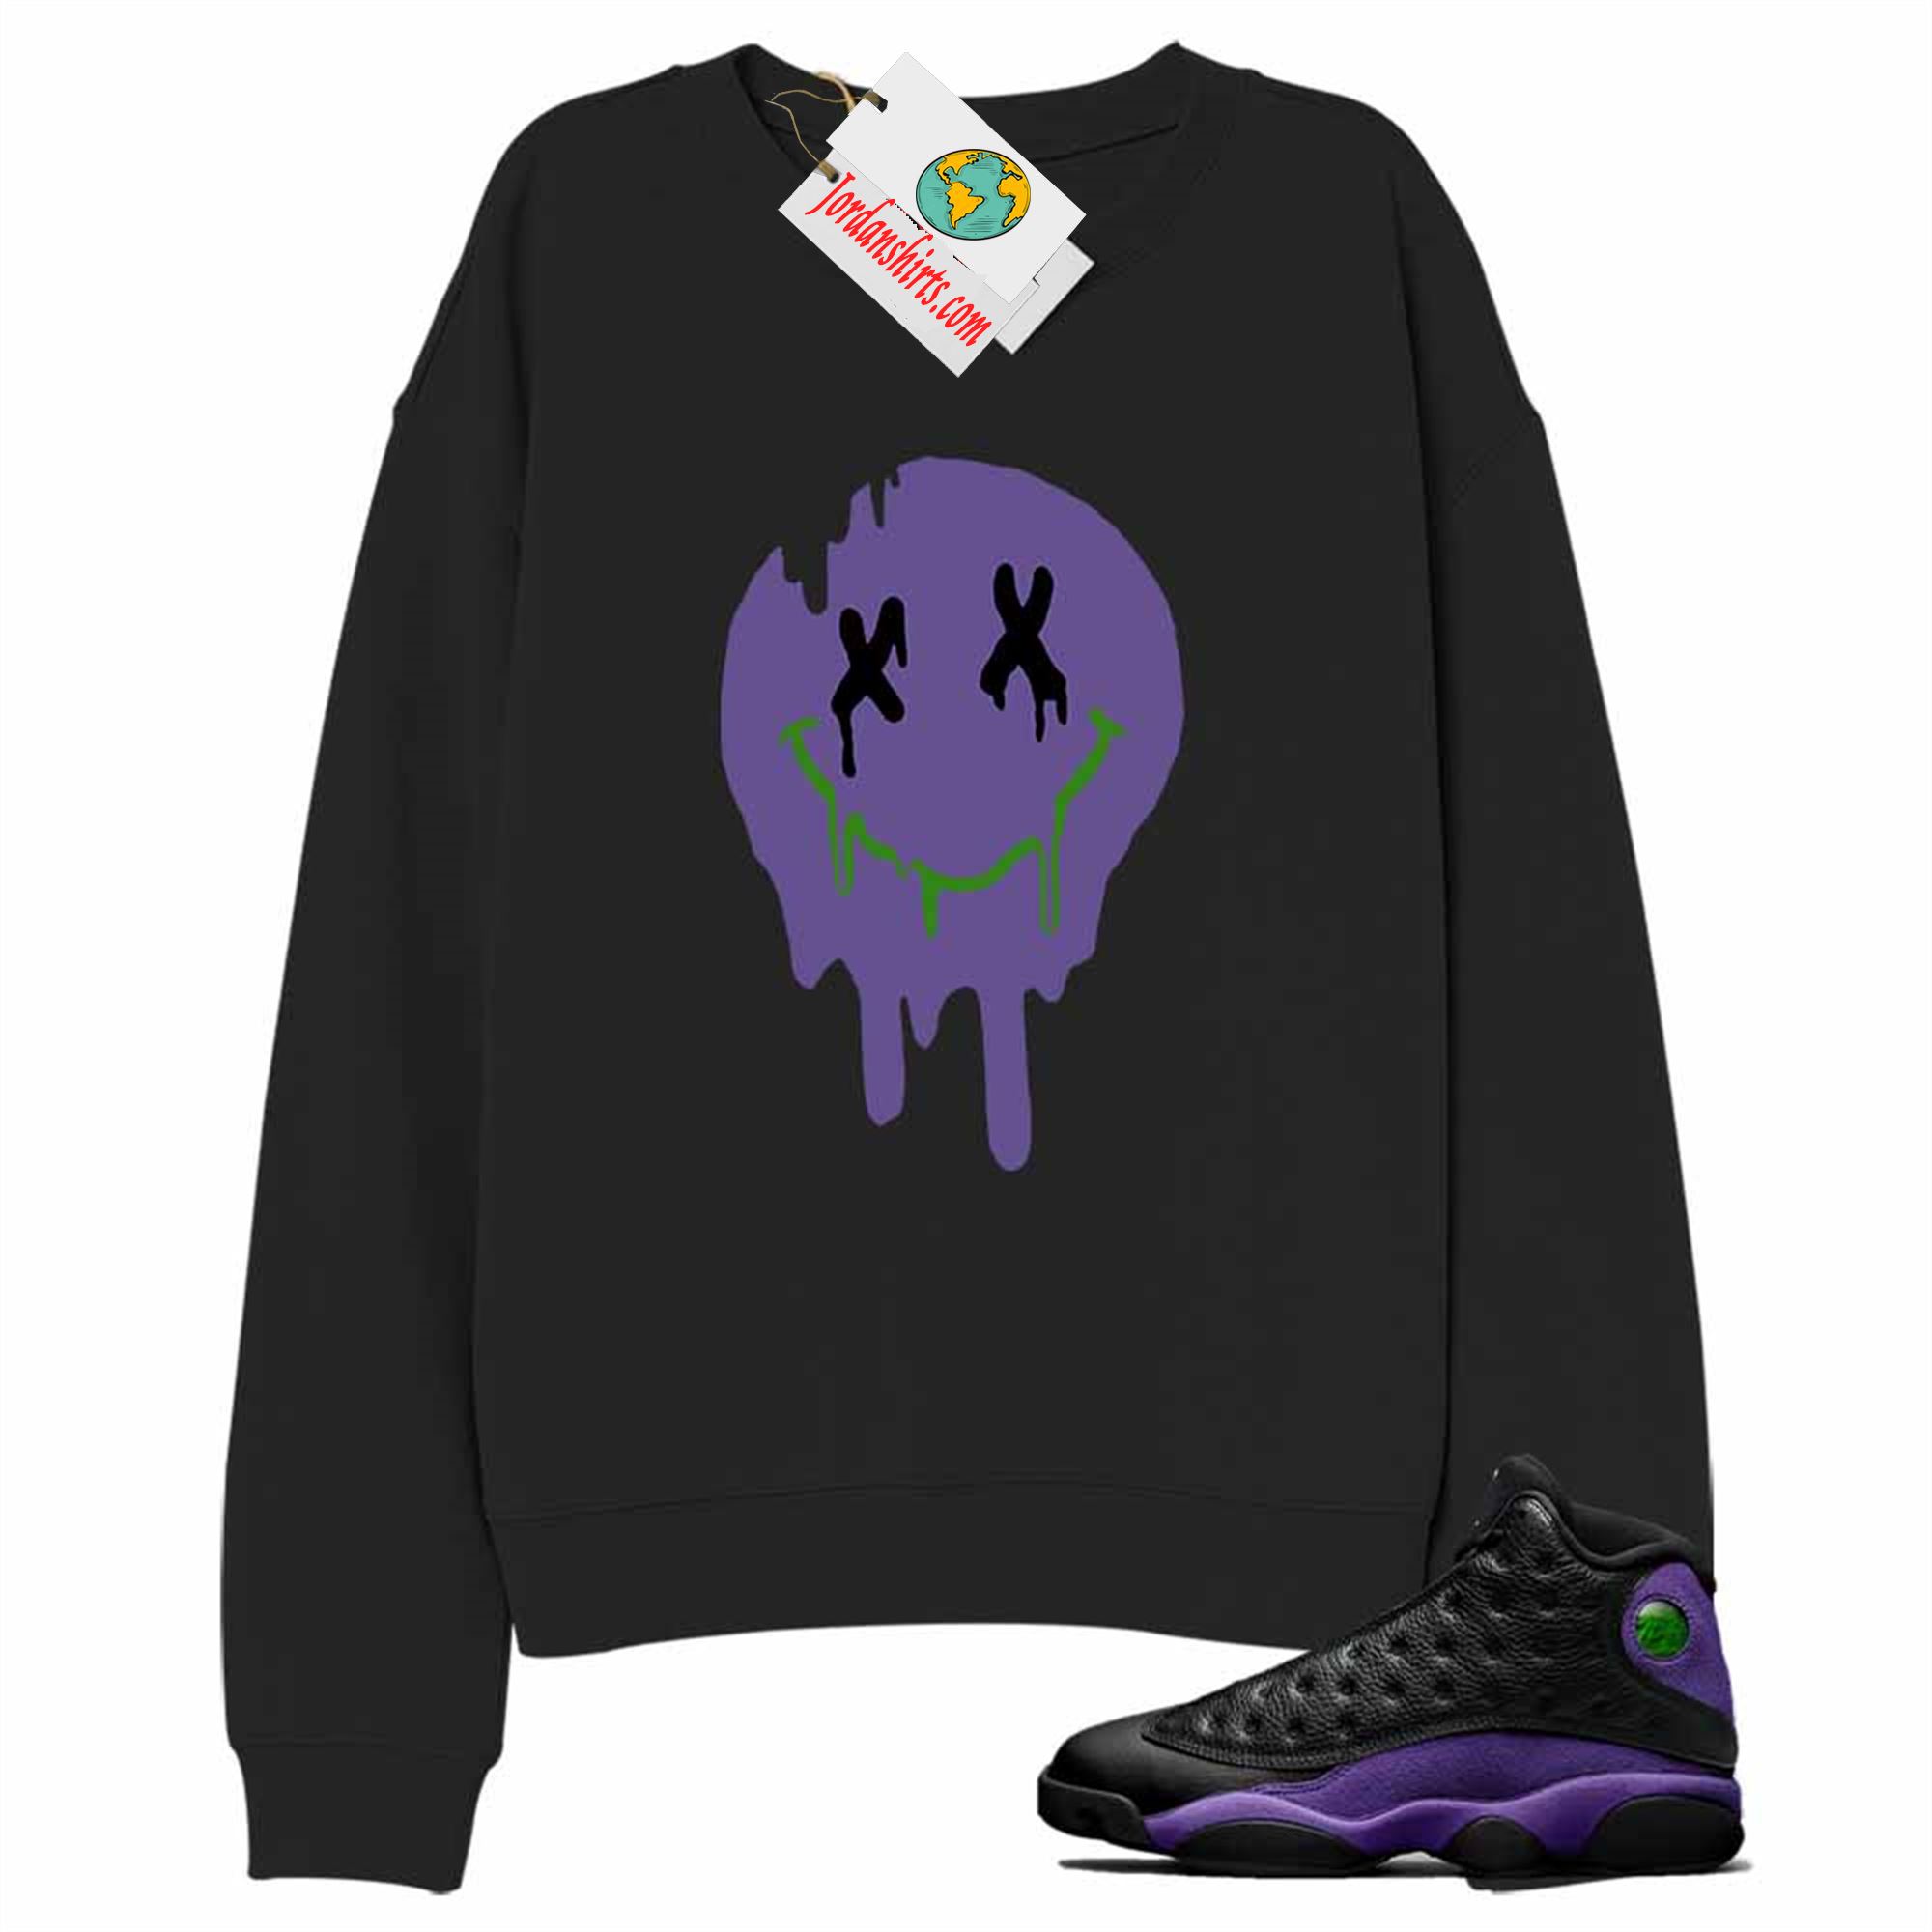 Jordan 13 Sweatshirt, Happy Face Dripping Black Sweatshirt Air Jordan 13 Court Purple 13s Plus Size Up To 5xl